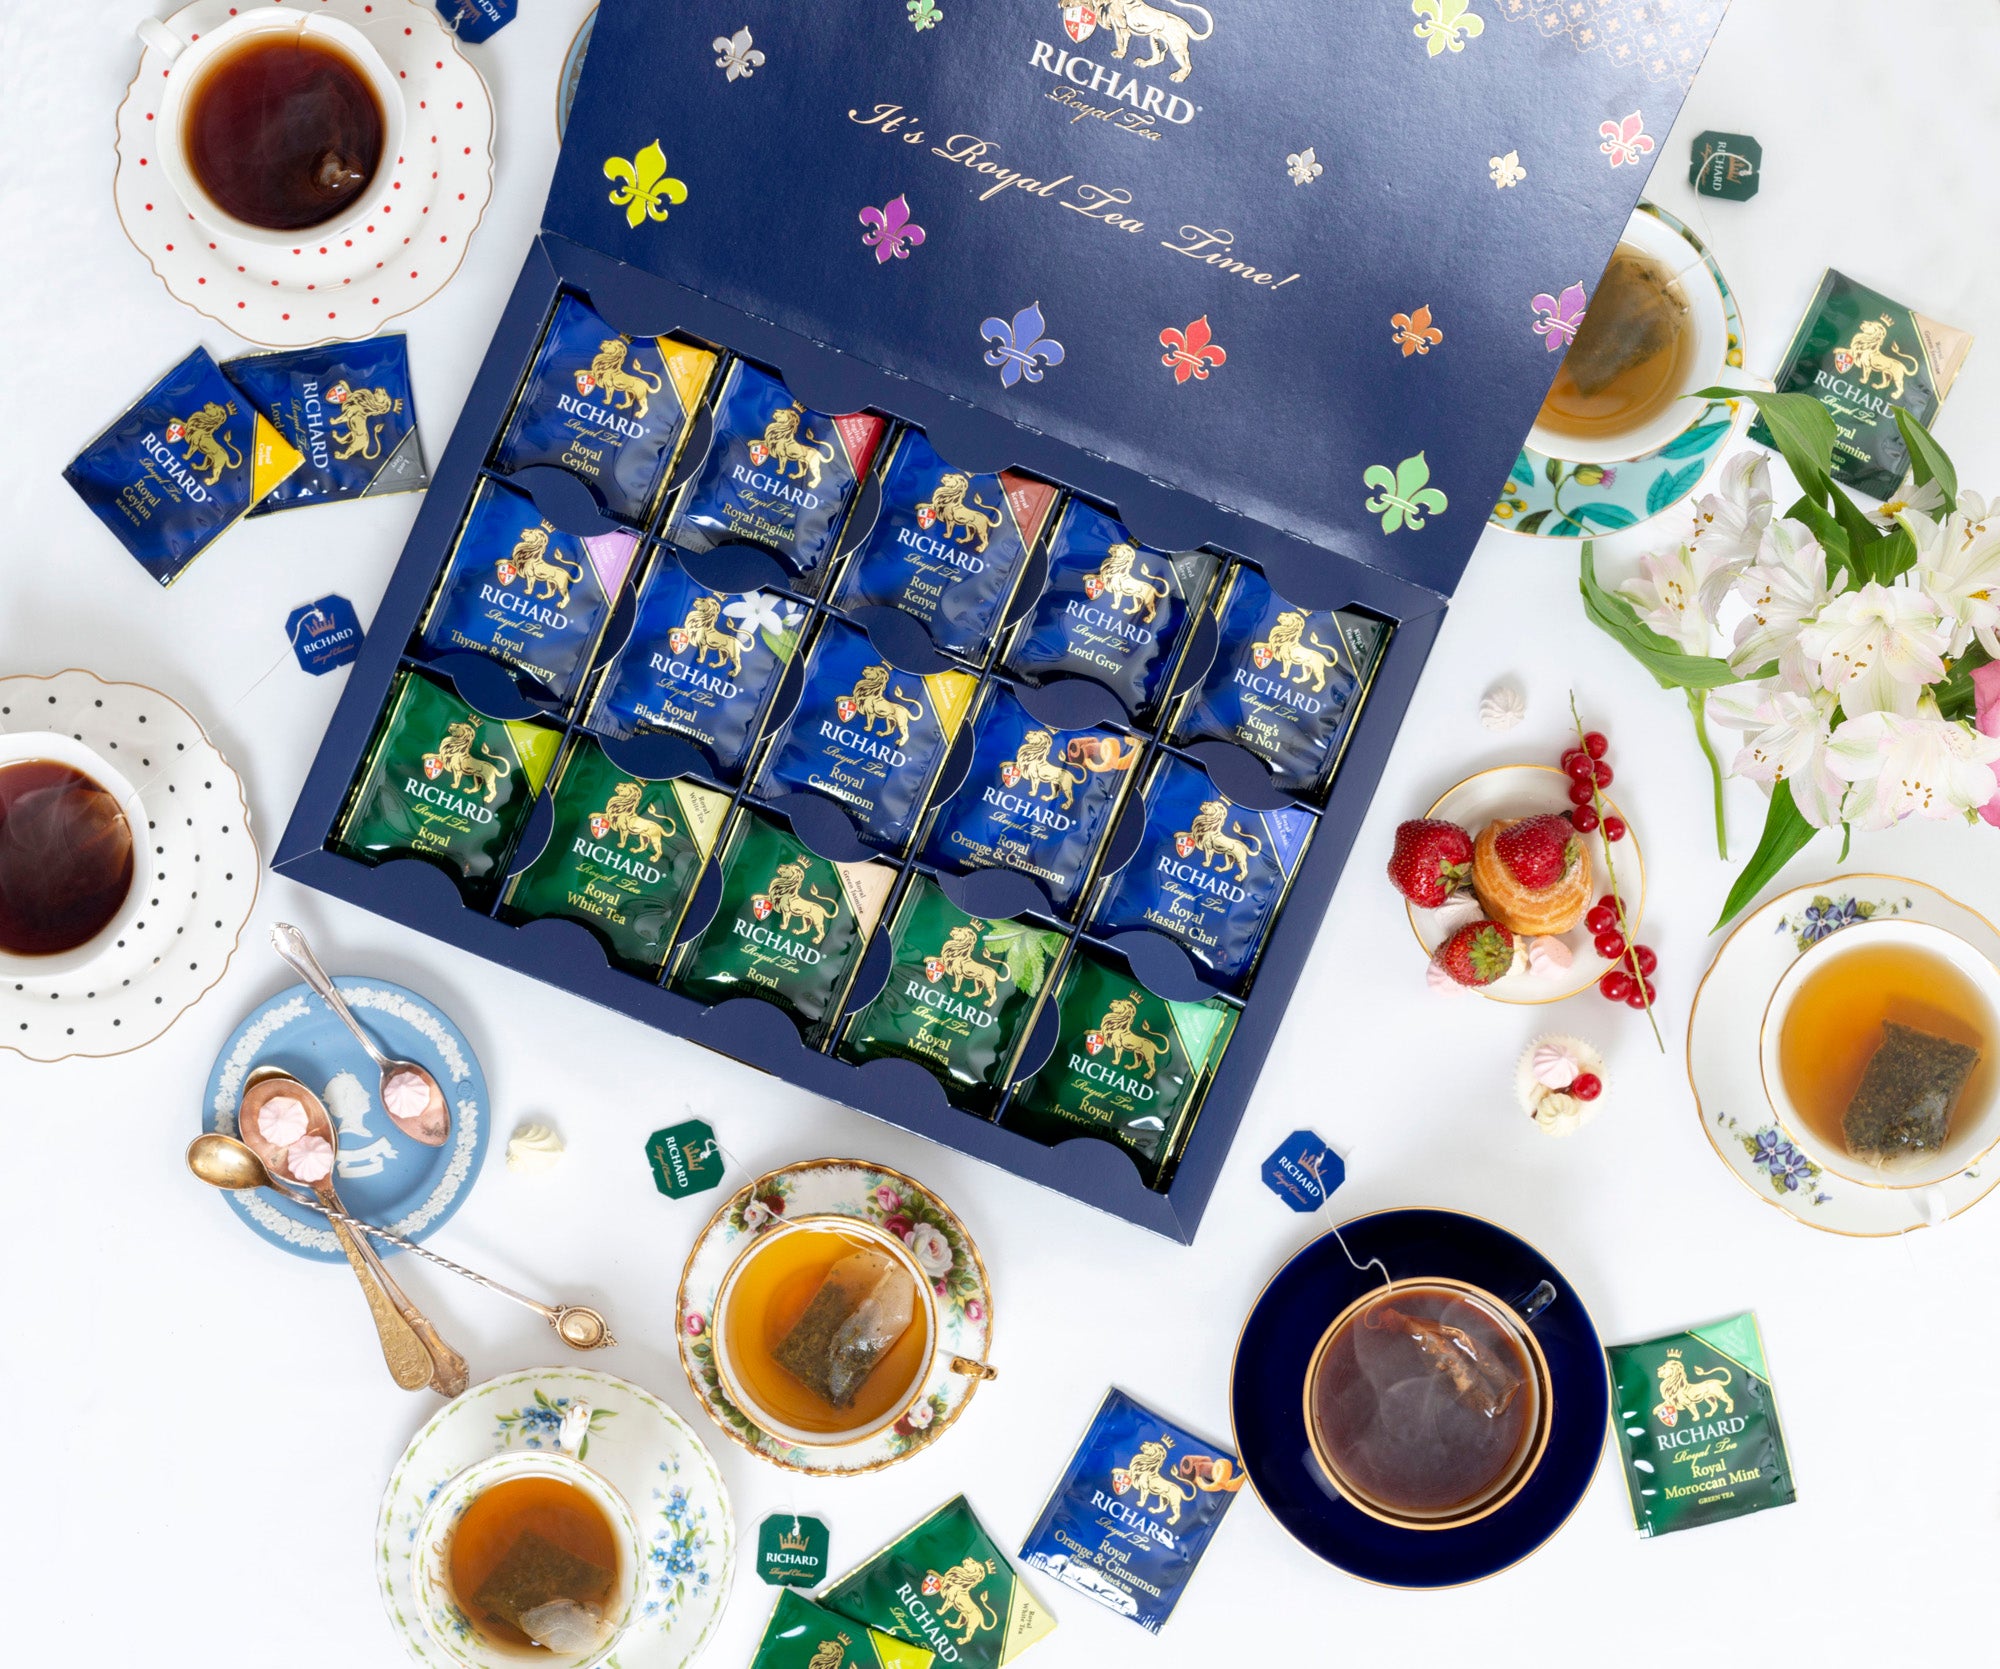 Richard Royal Tea Collection, tea bag set - 120 sachets, 15 flavours